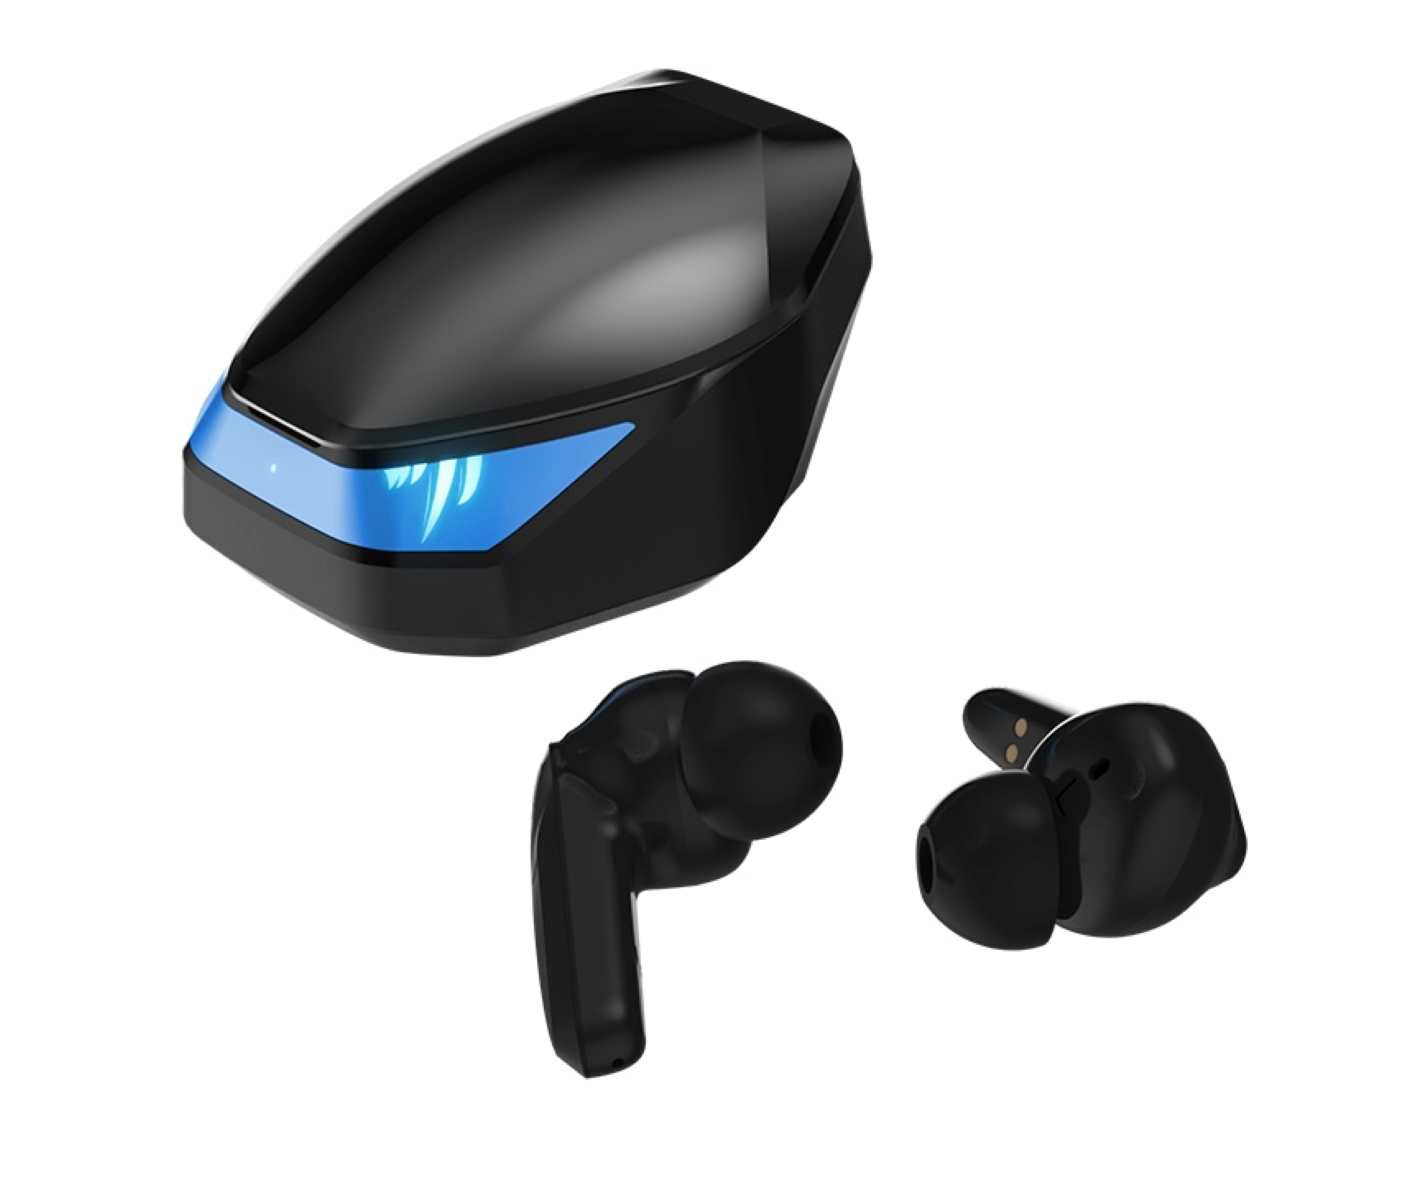 SADES Wings 200 TW-S02, In-ear schwarz/blau Gaming-Kopfhöhrer Bluetooth